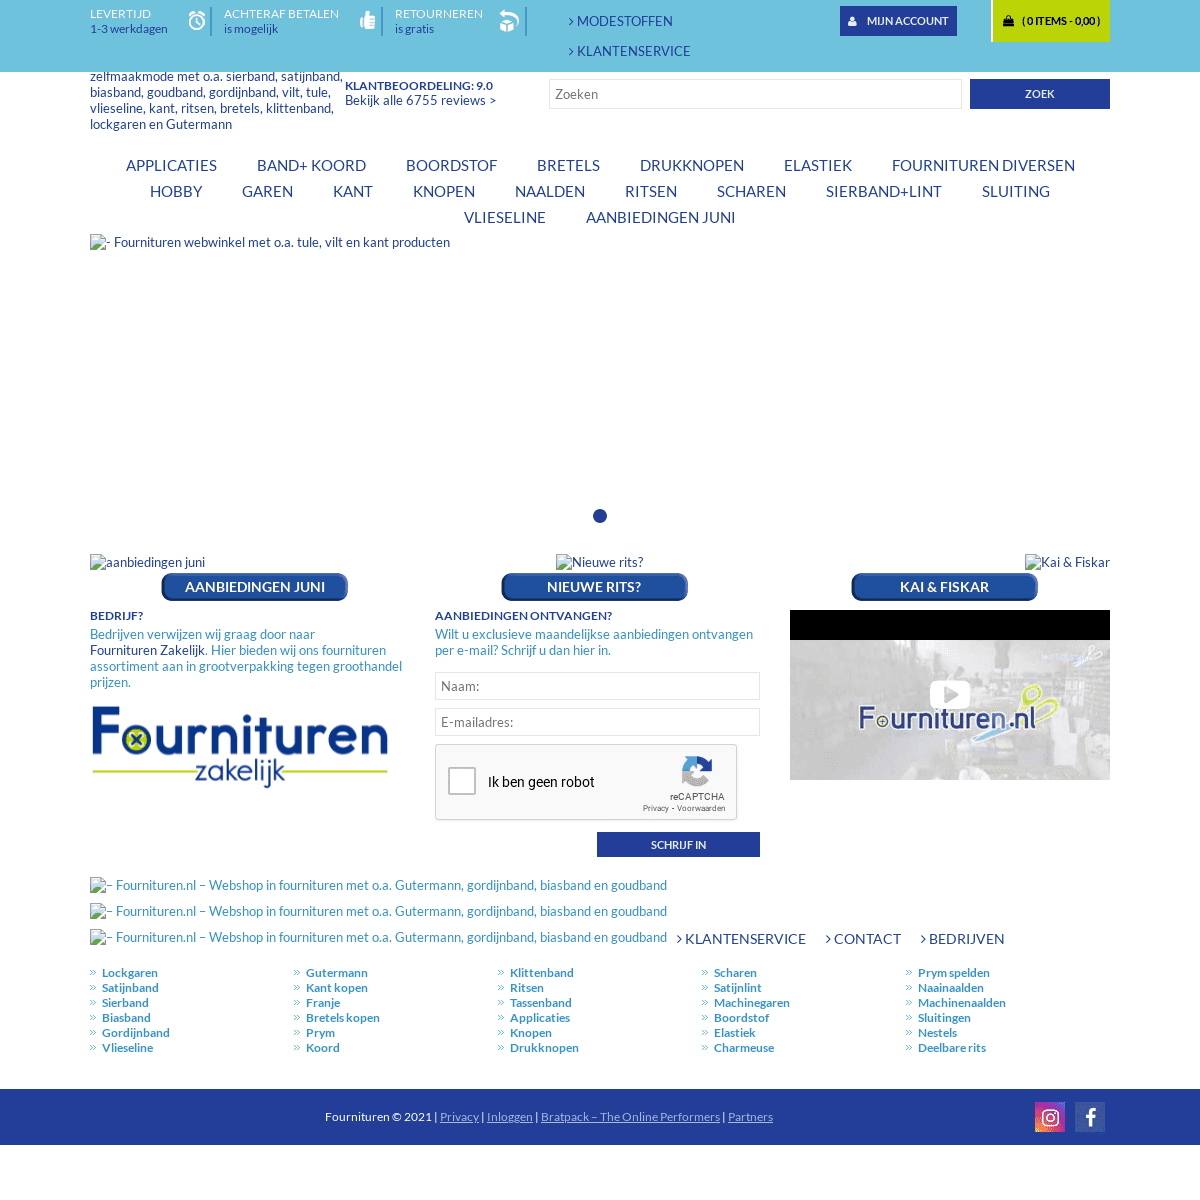 A complete backup of https://fournituren.nl